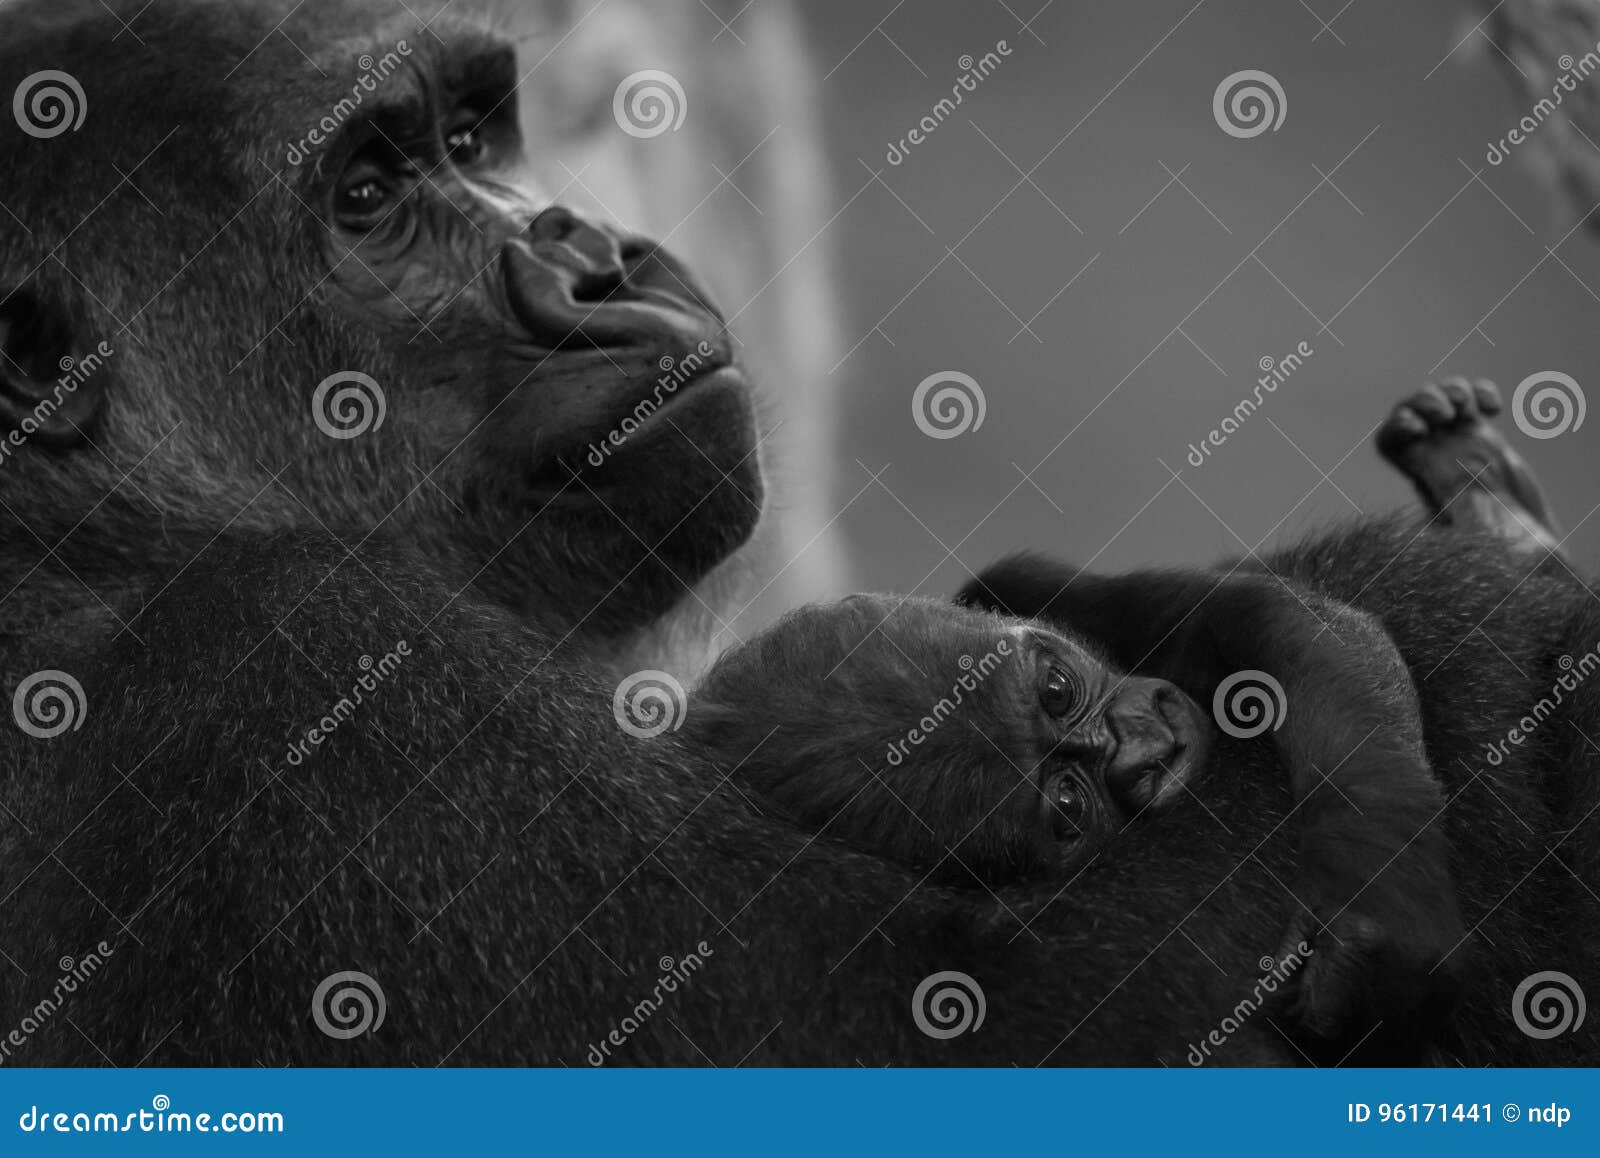 mono gorilla baby on arm of mother